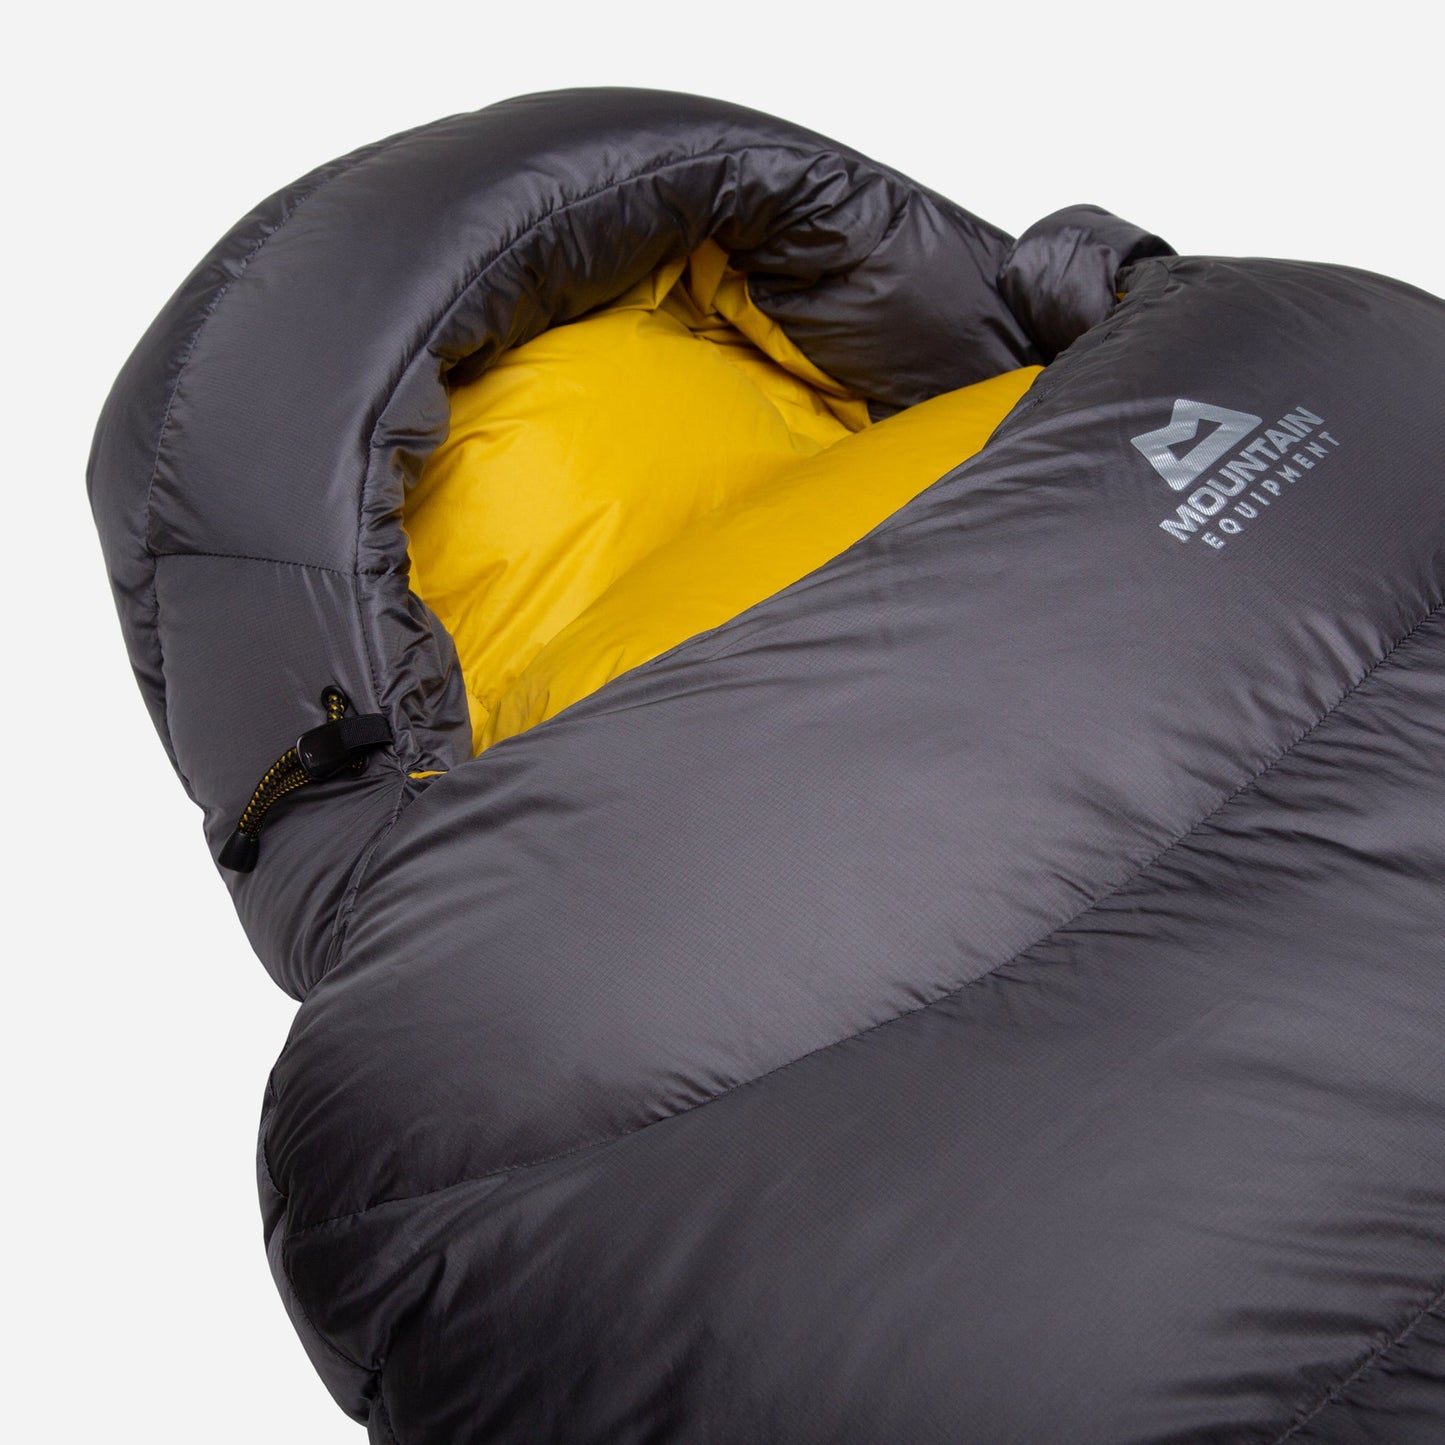 Mountain Equipment - Helium GT 400 Sleeping Bag